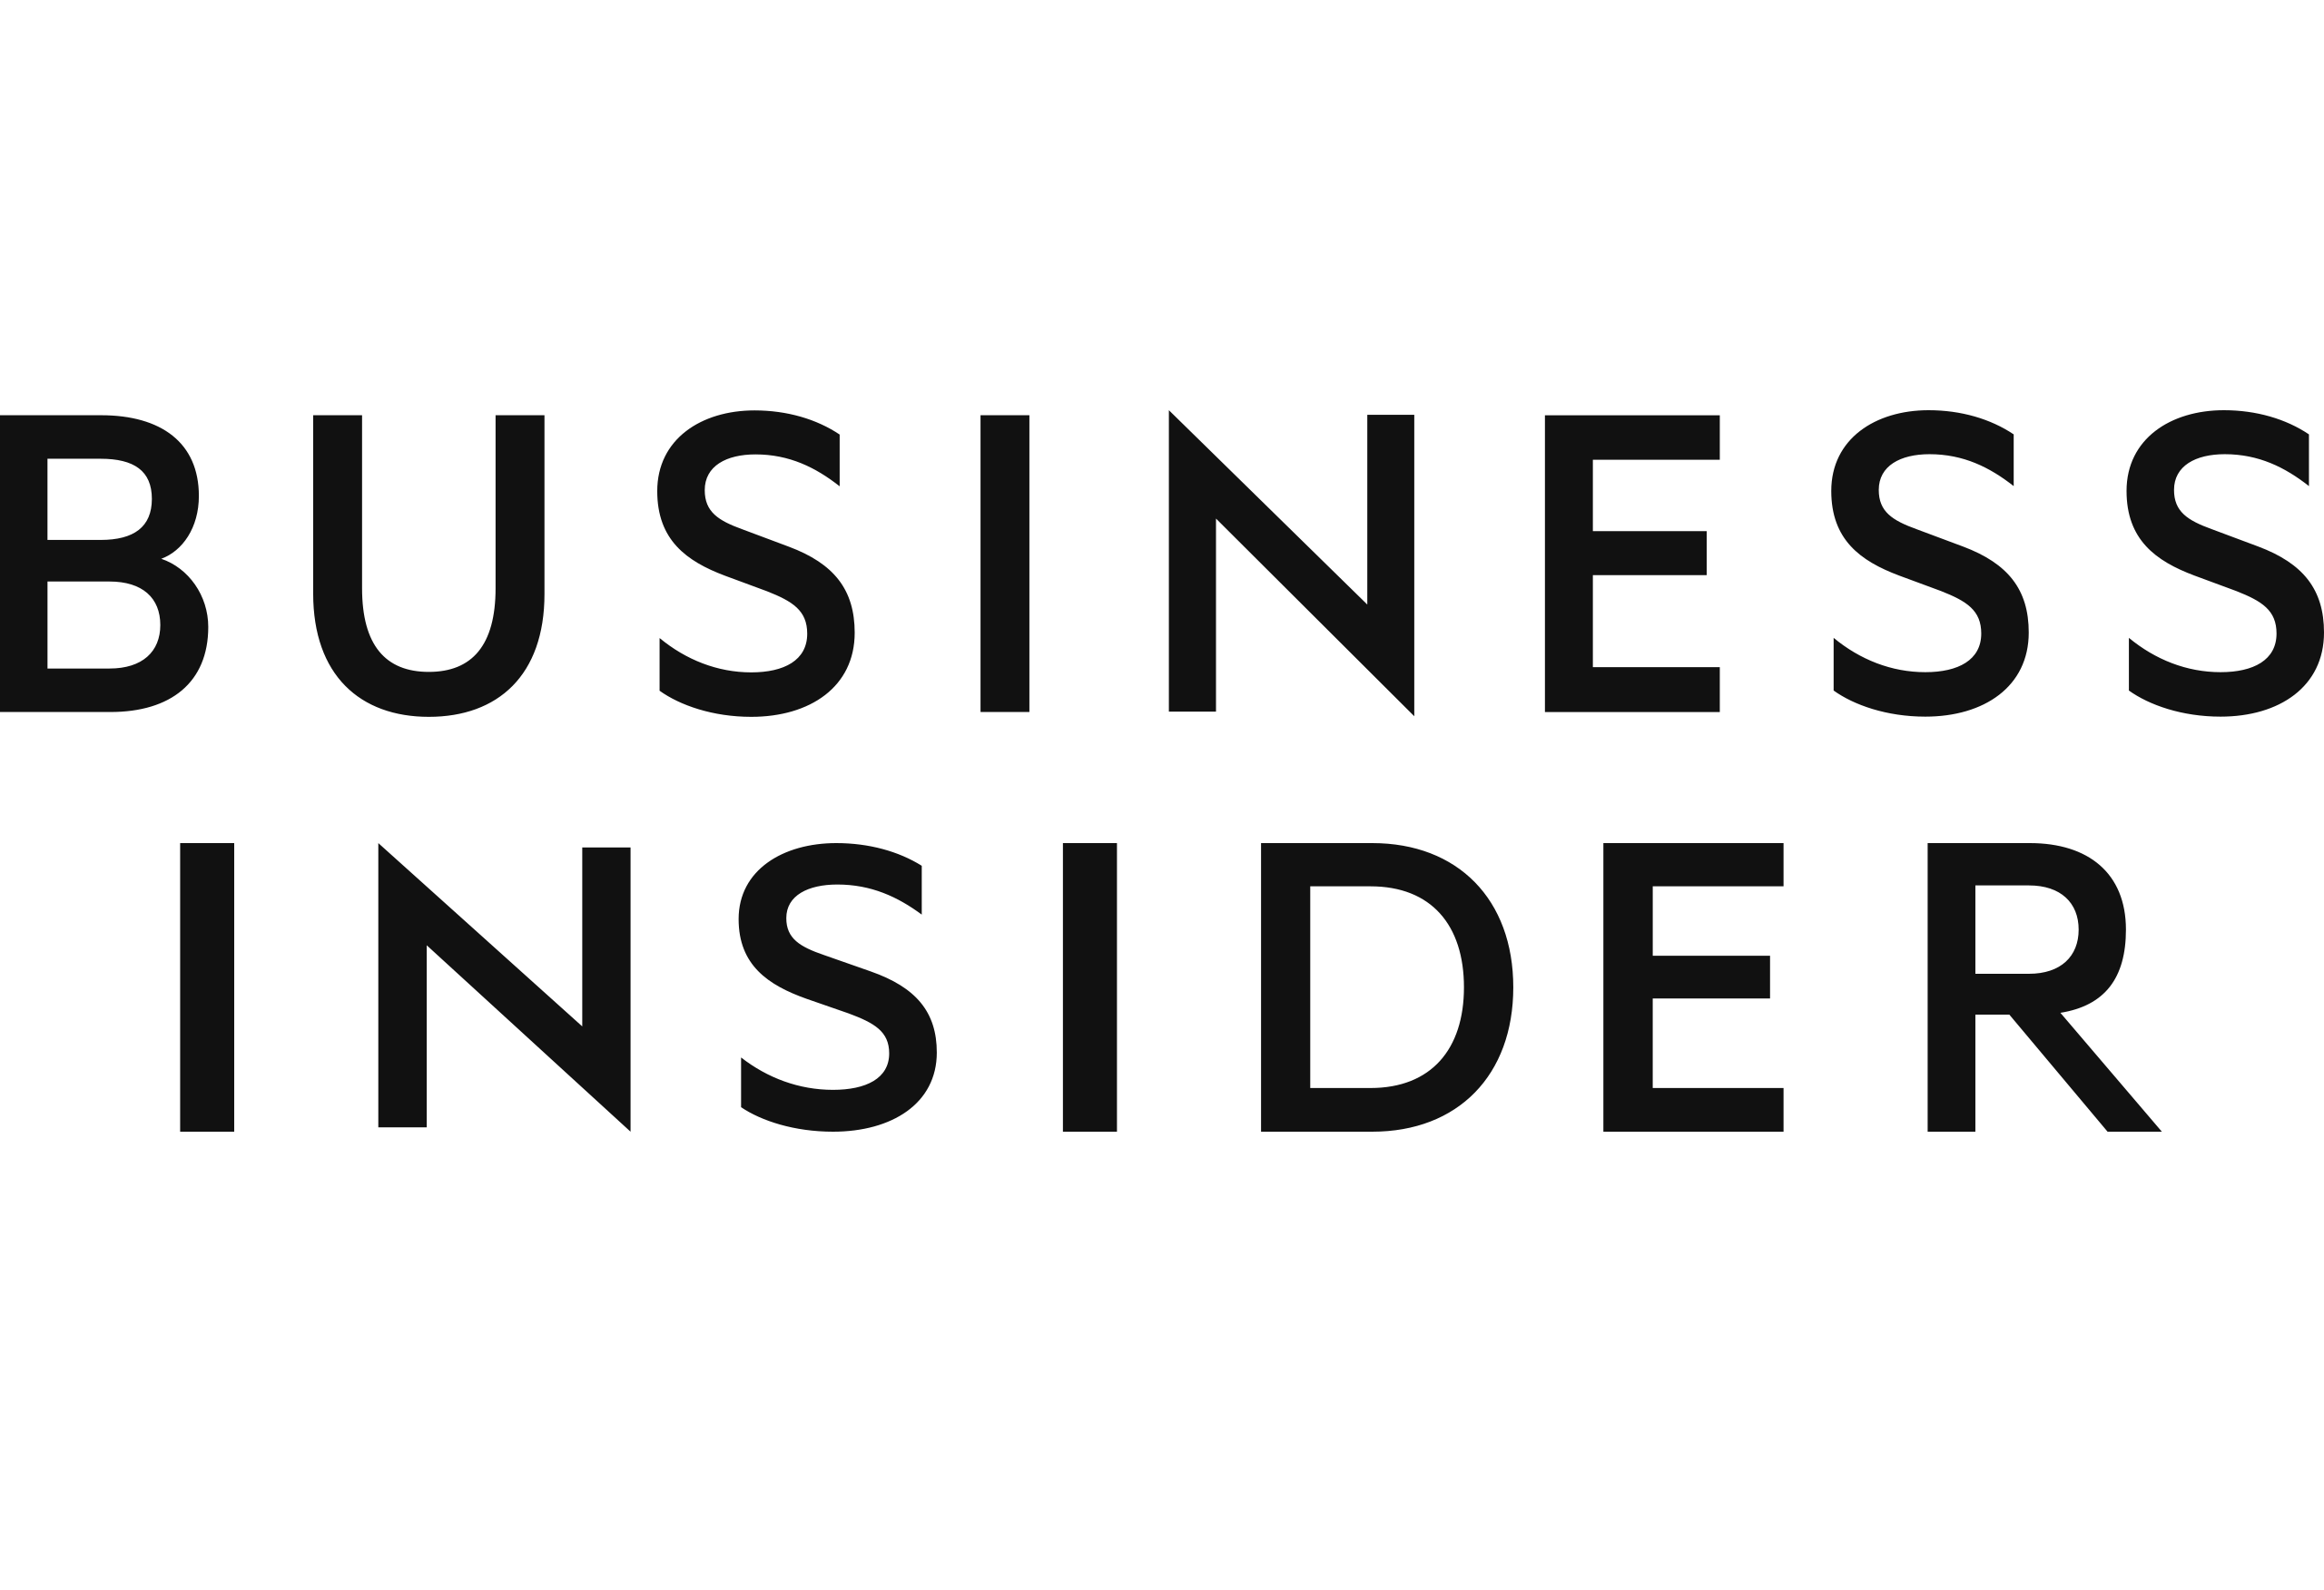 <b>Business Insider:</B> You